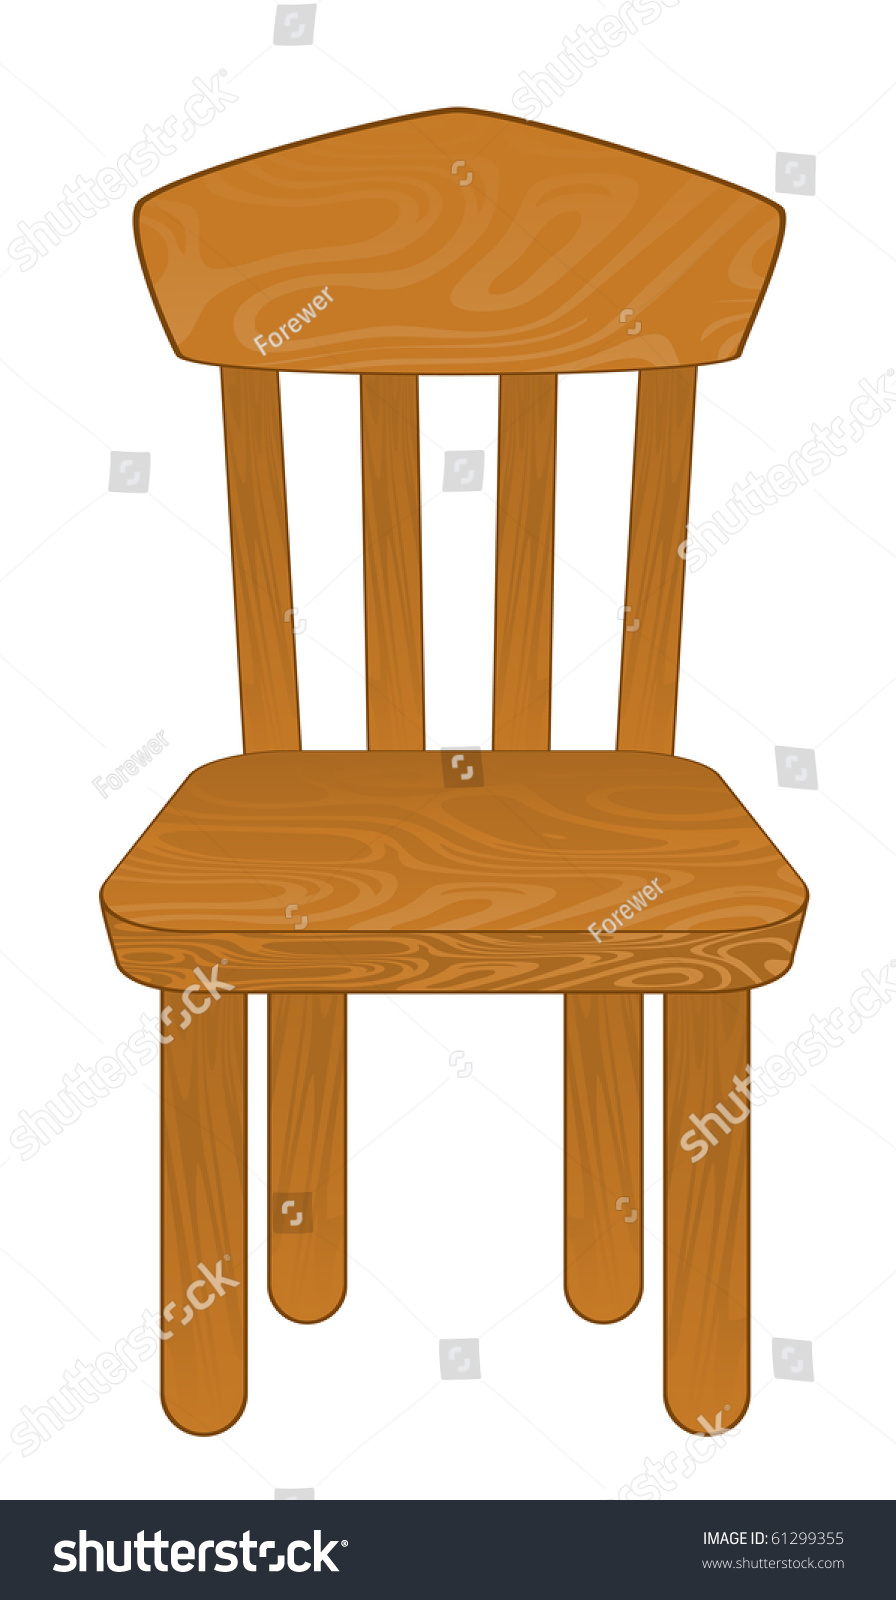 clipart musical chairs - photo #38